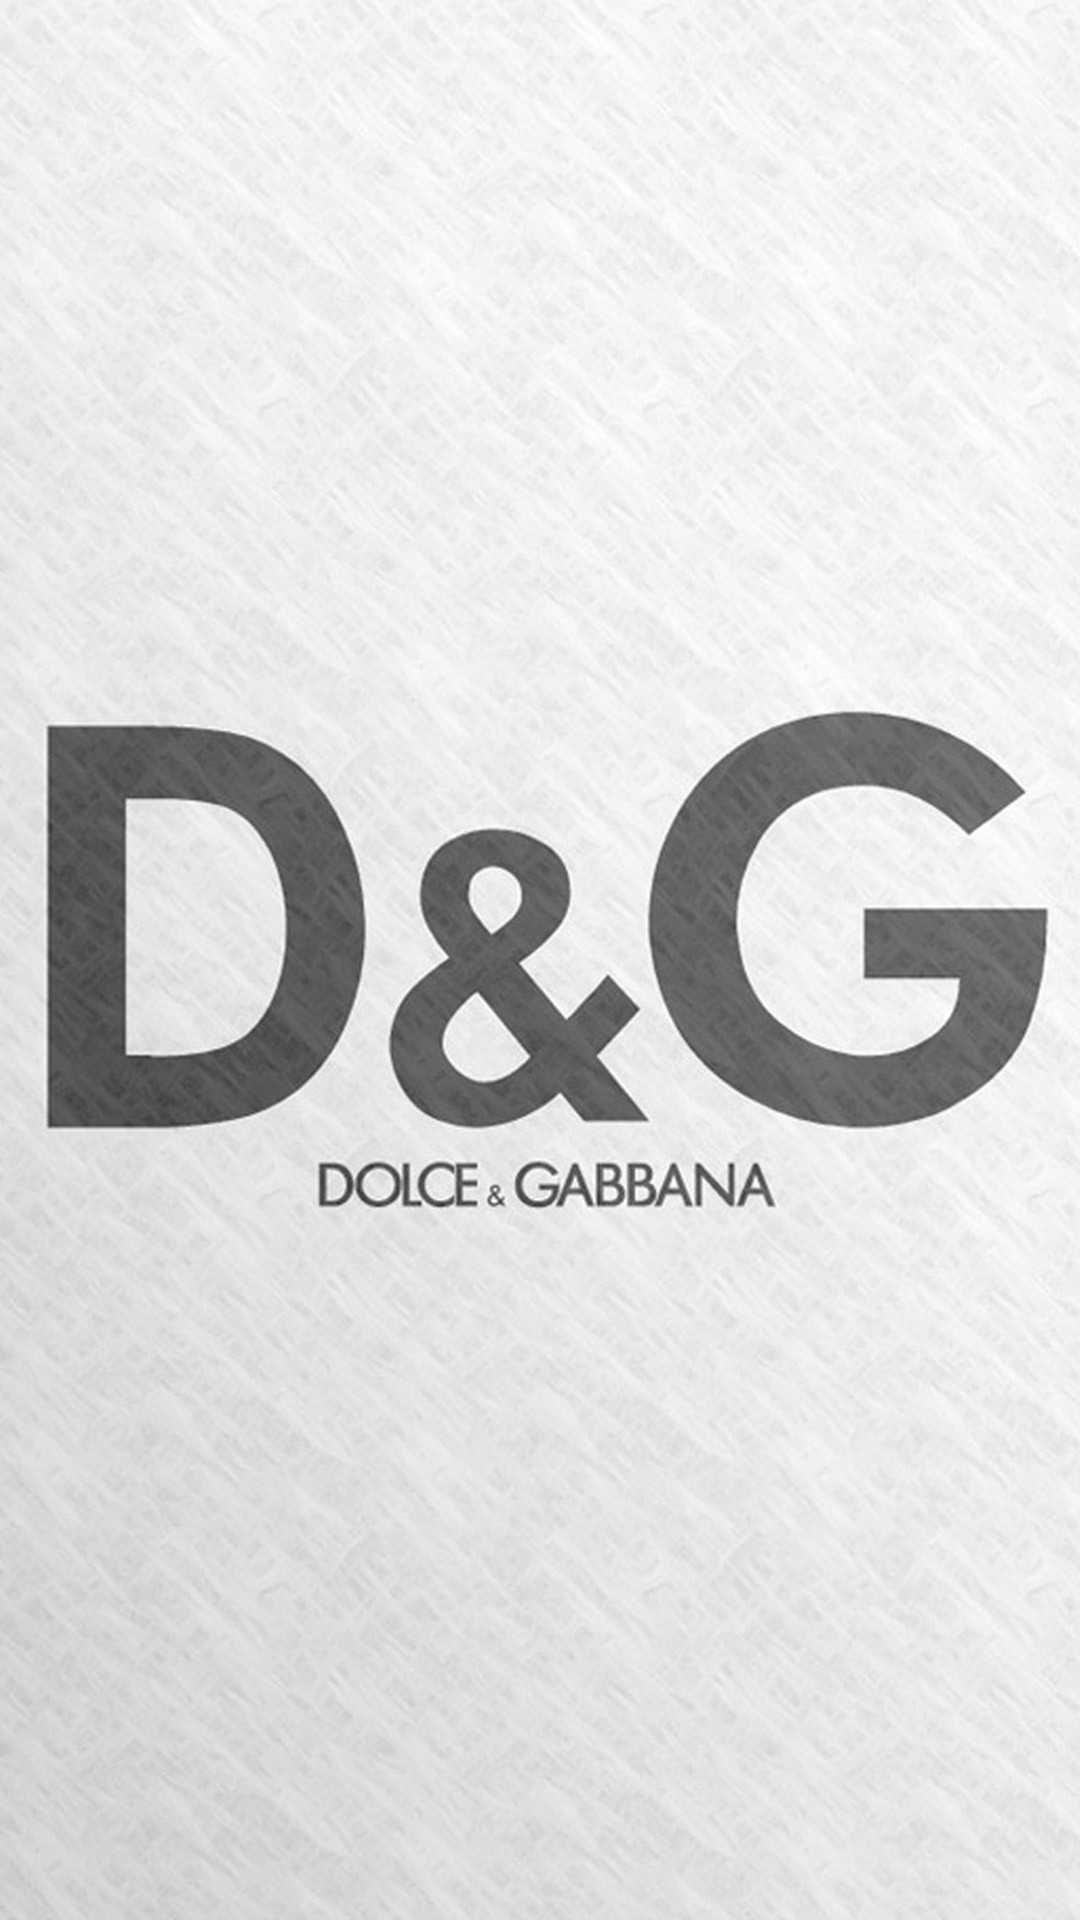 Dolce Gabbana Xperia Z2 Wallpapers 1080x1920